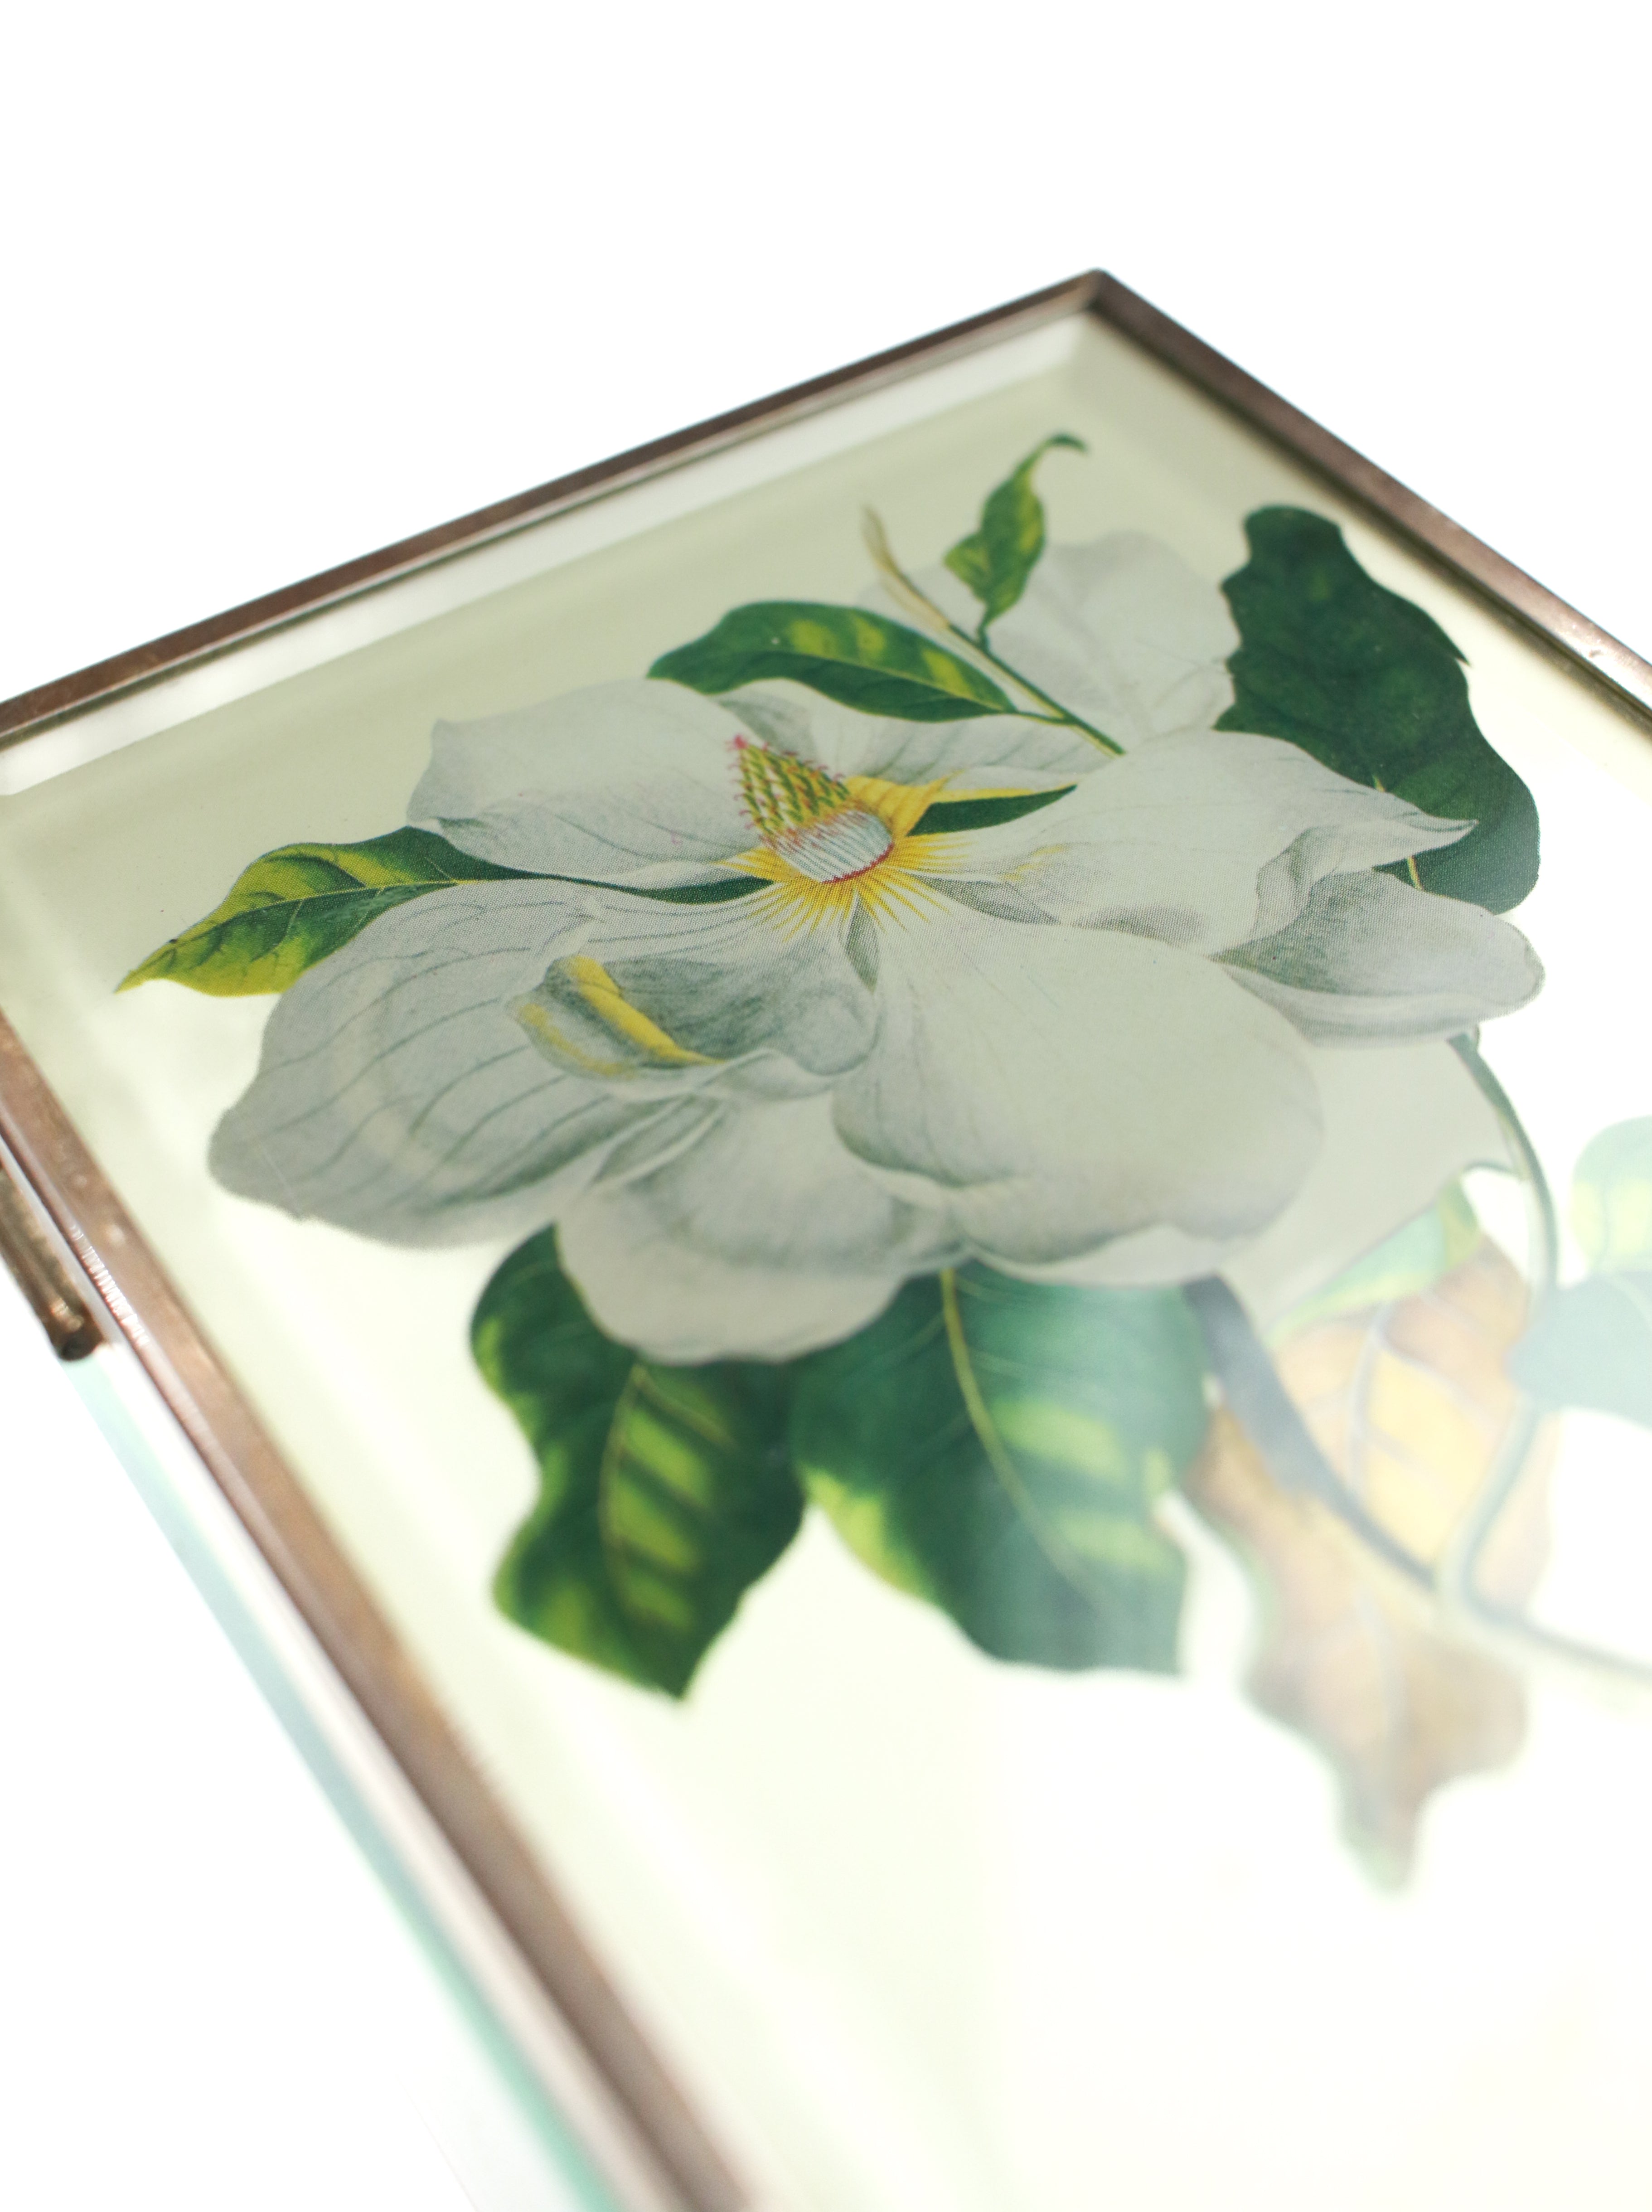 Whit's Vintage Picks | Magnolia Jewelry Box